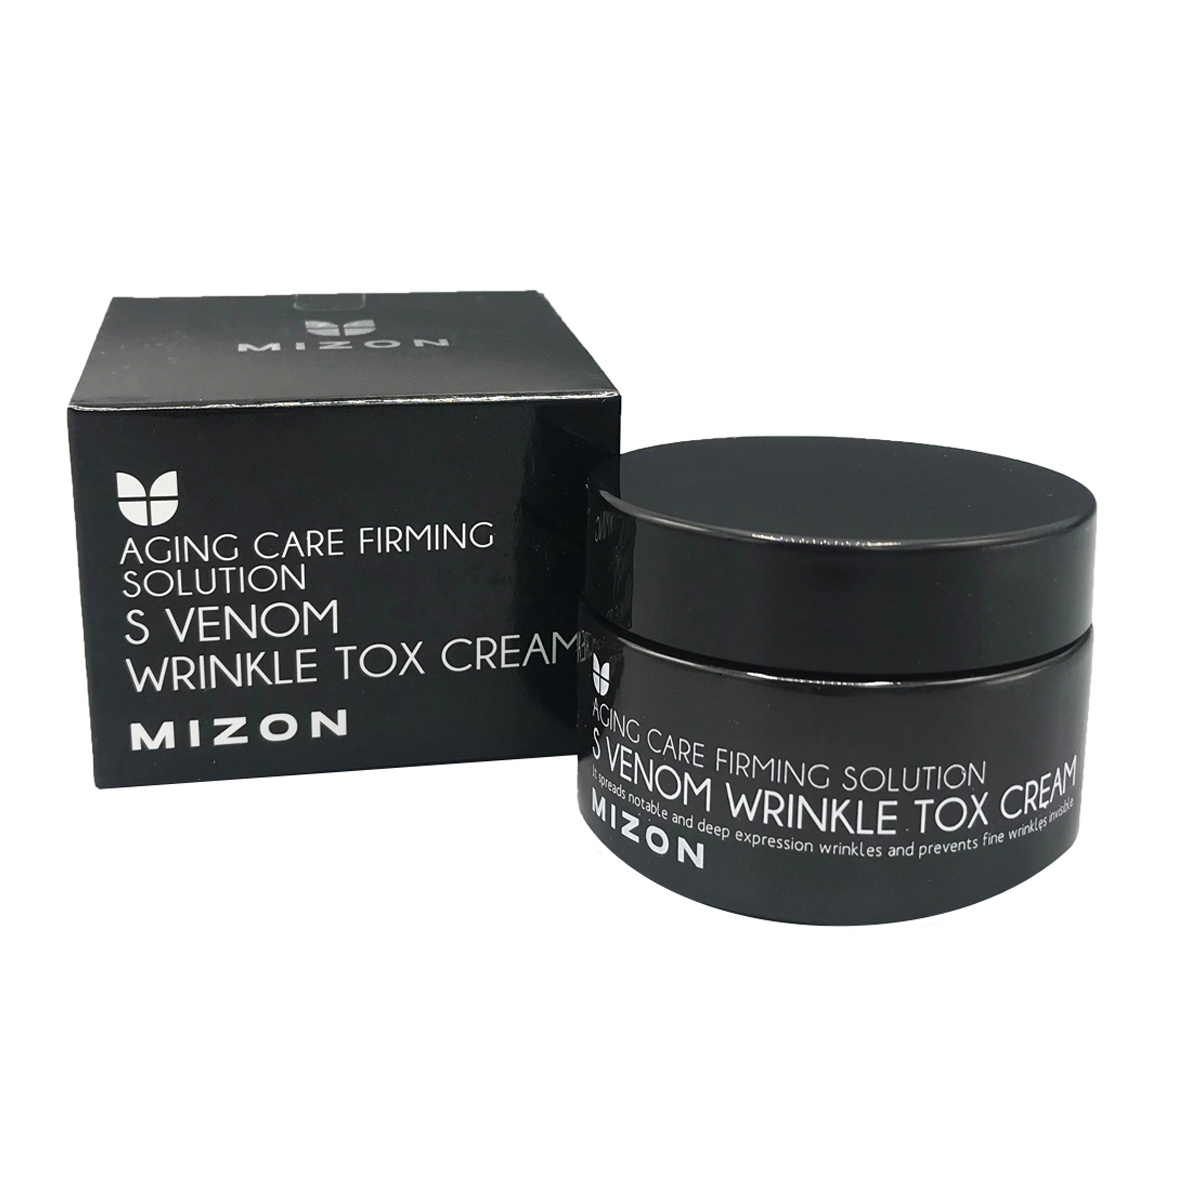 S venin wrinkle tox cream missha, First Aid Beauty Ultra Repair Oat & Cannabis Sativa Seed Oil 30ml